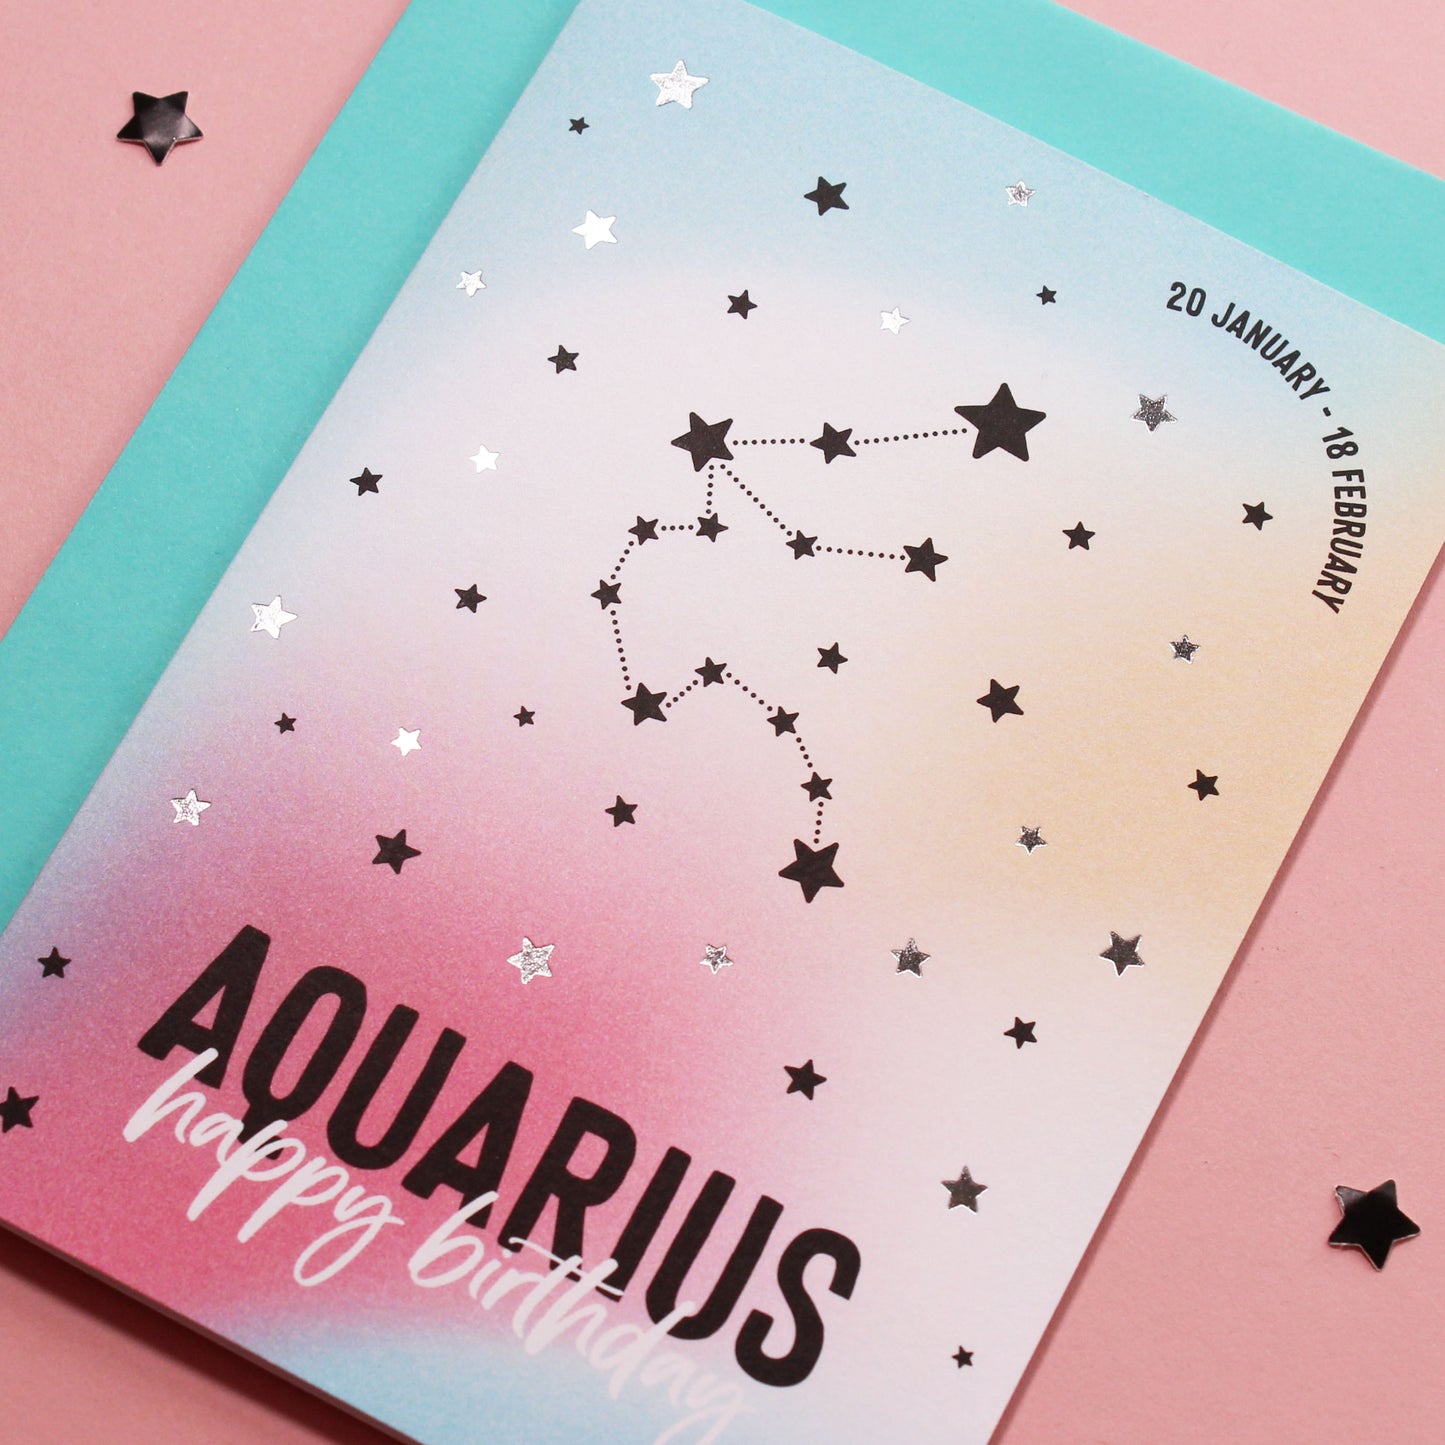 Aquarius birthday card